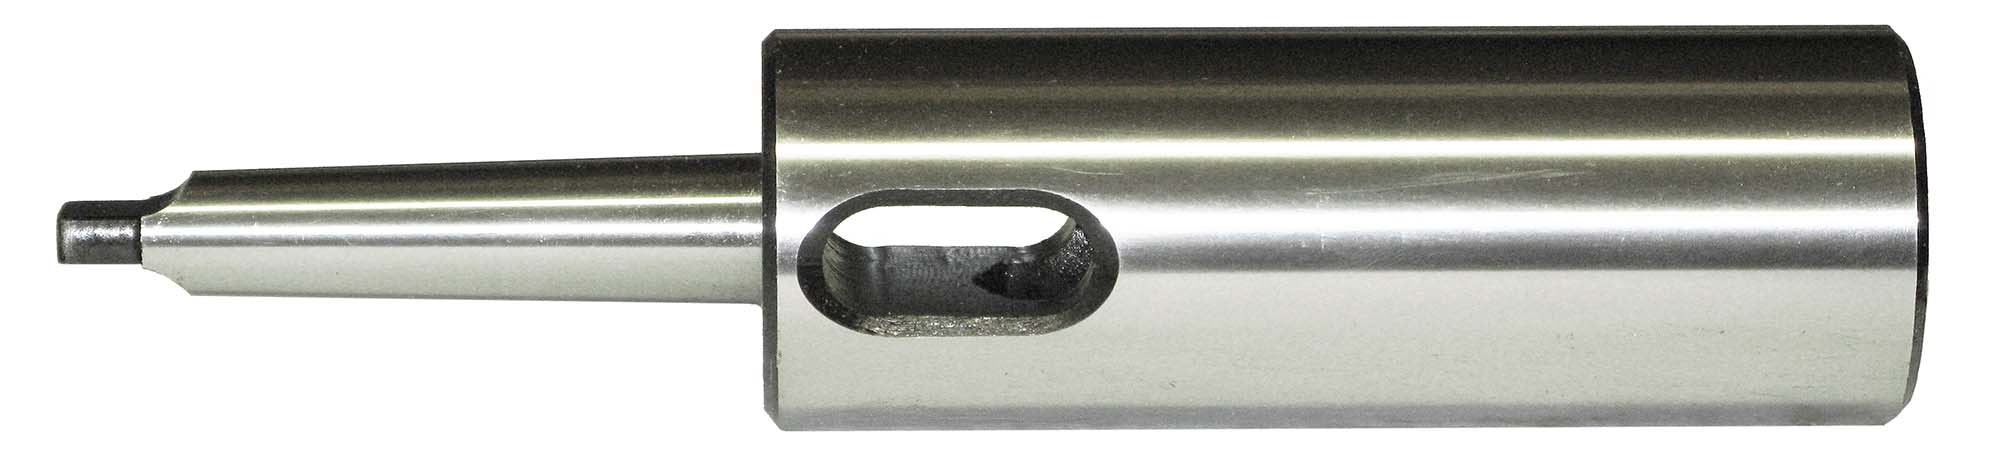 2 Morse Taper(hole)-1 Morse Taper(shank) Extension Socket, SL2-1